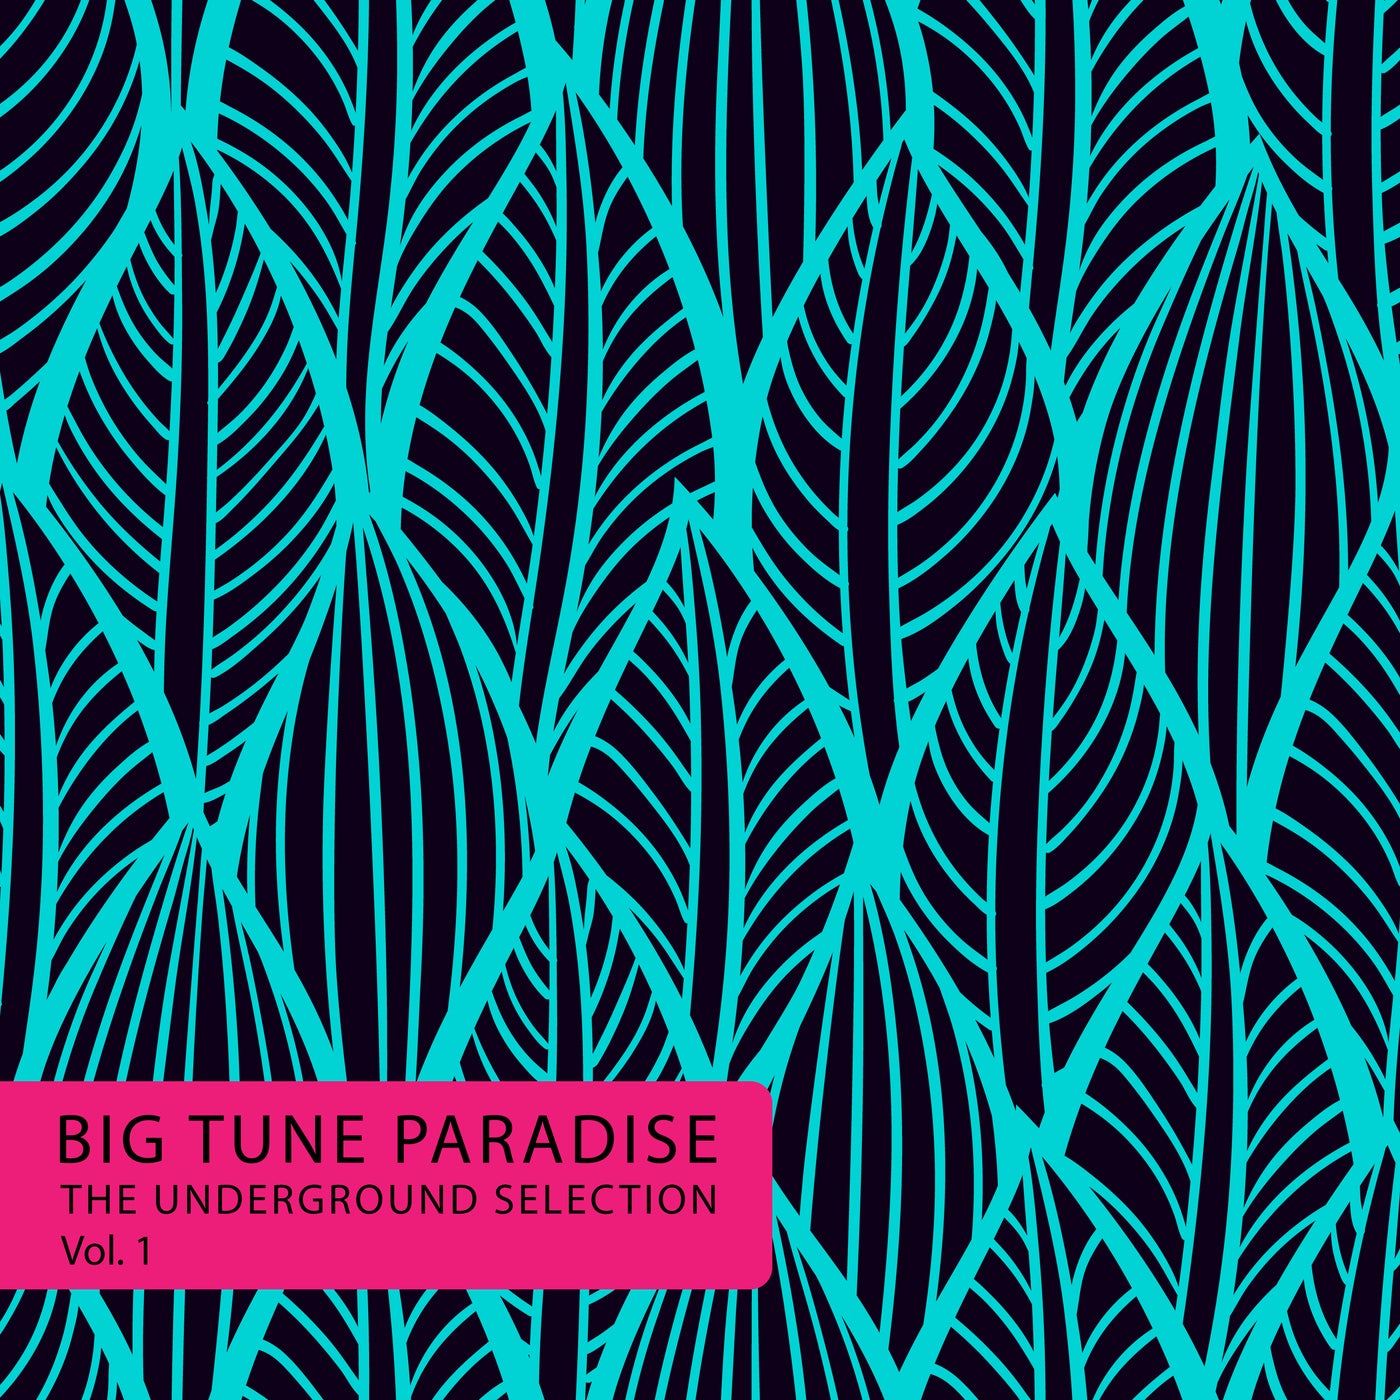 Big Tune Paradise - the Underground Selection, Vol. 1